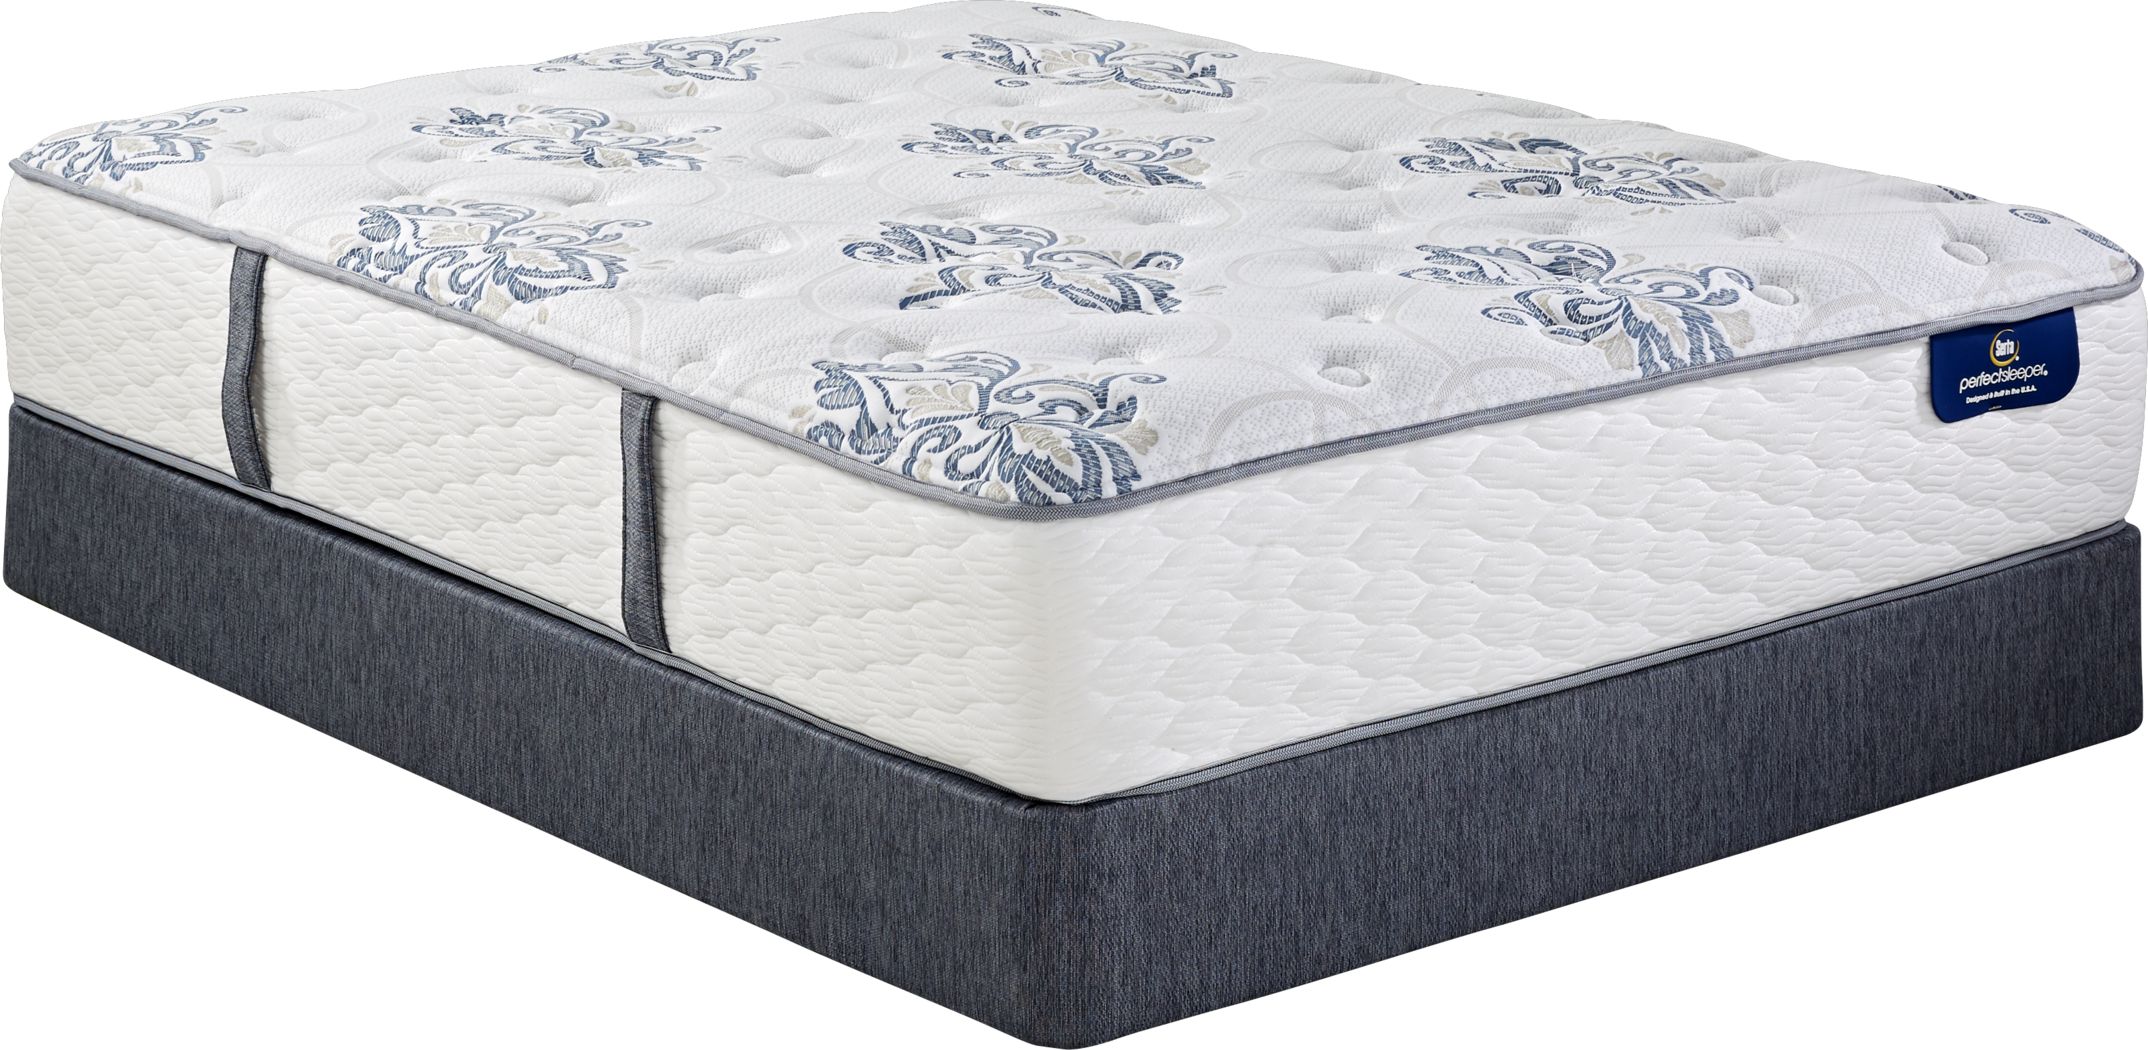 perfect sleeper elite mattress pad